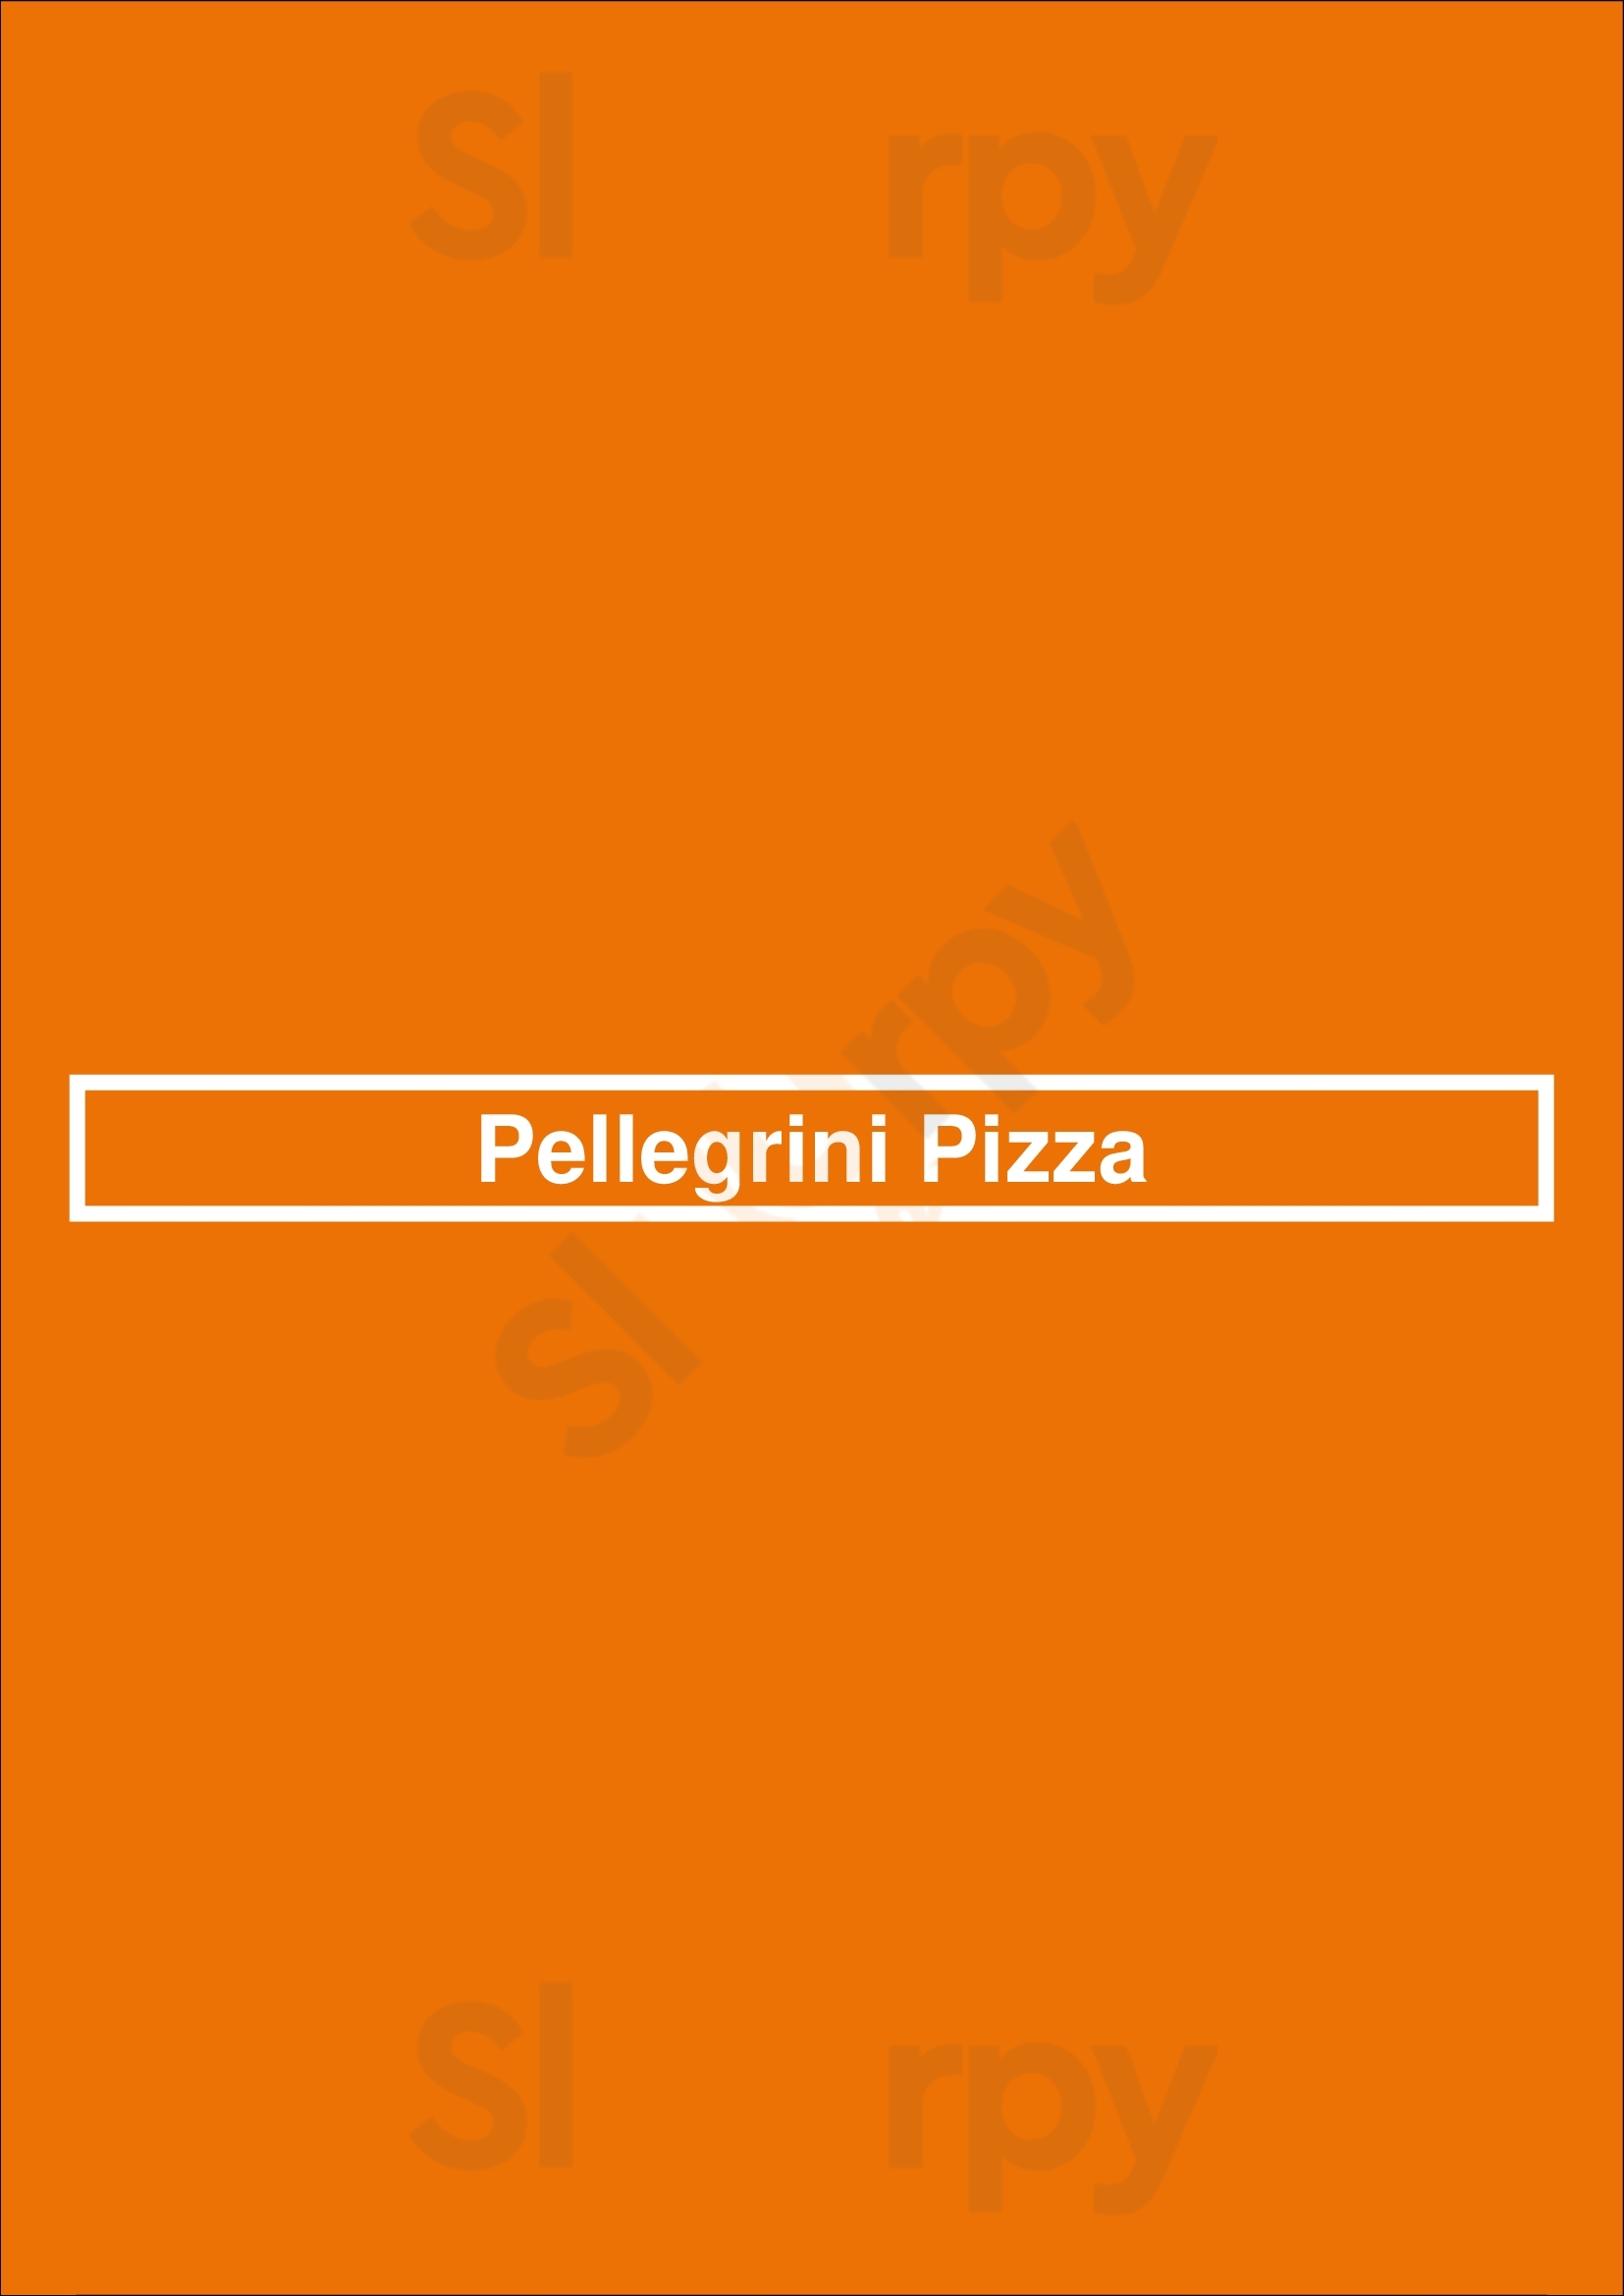 Pellegrini Pizza Las Vegas Menu - 1